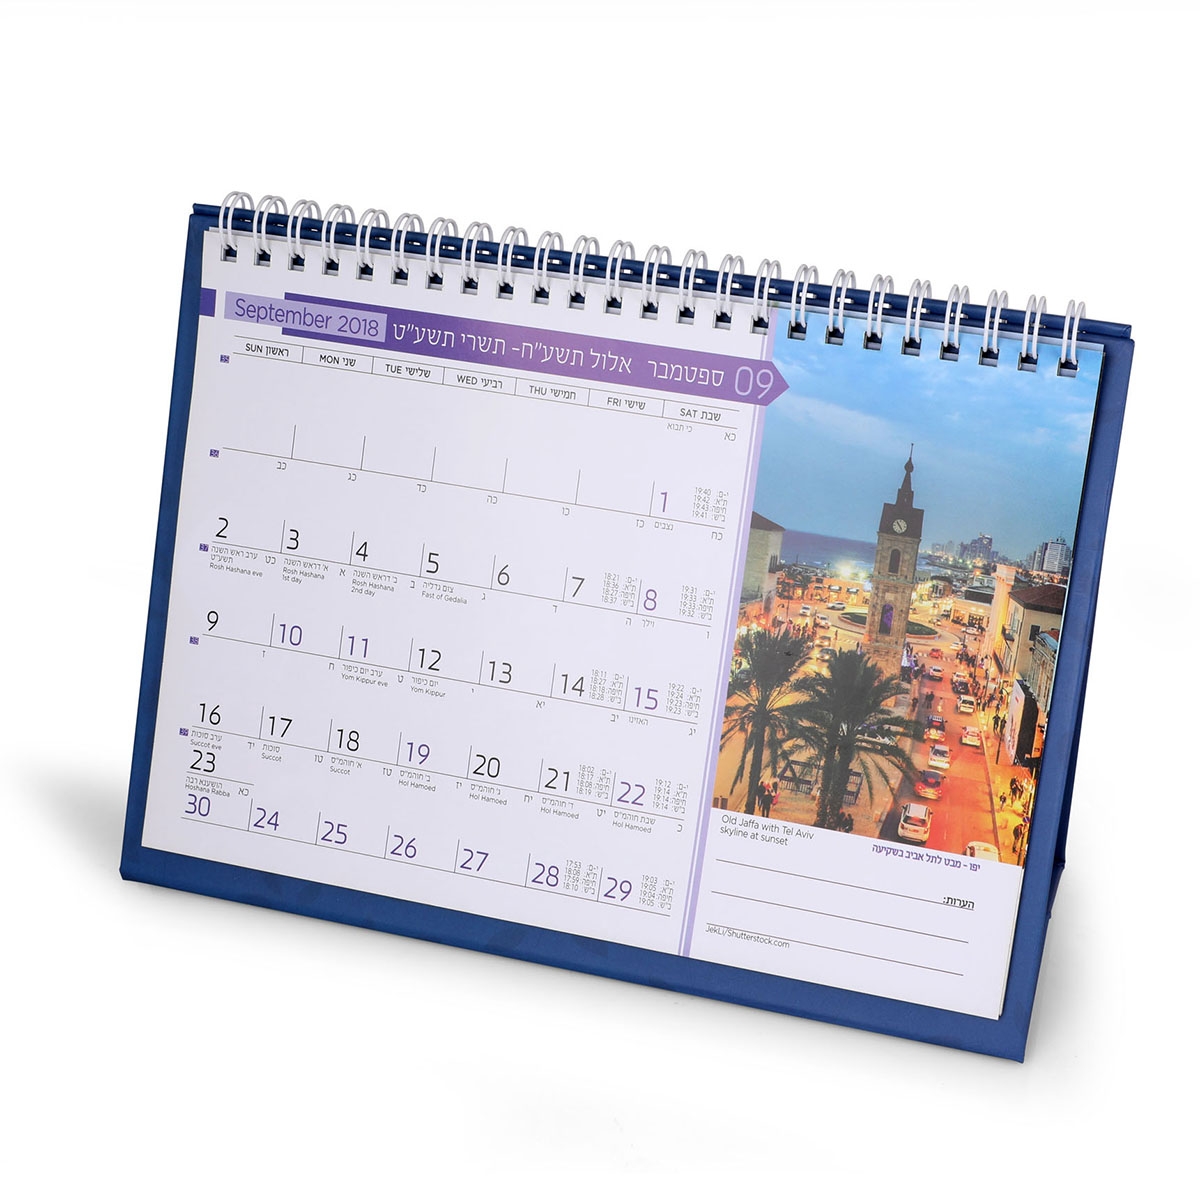 The Views of Israel Desktop Picture Calendar 2019-20 - 1